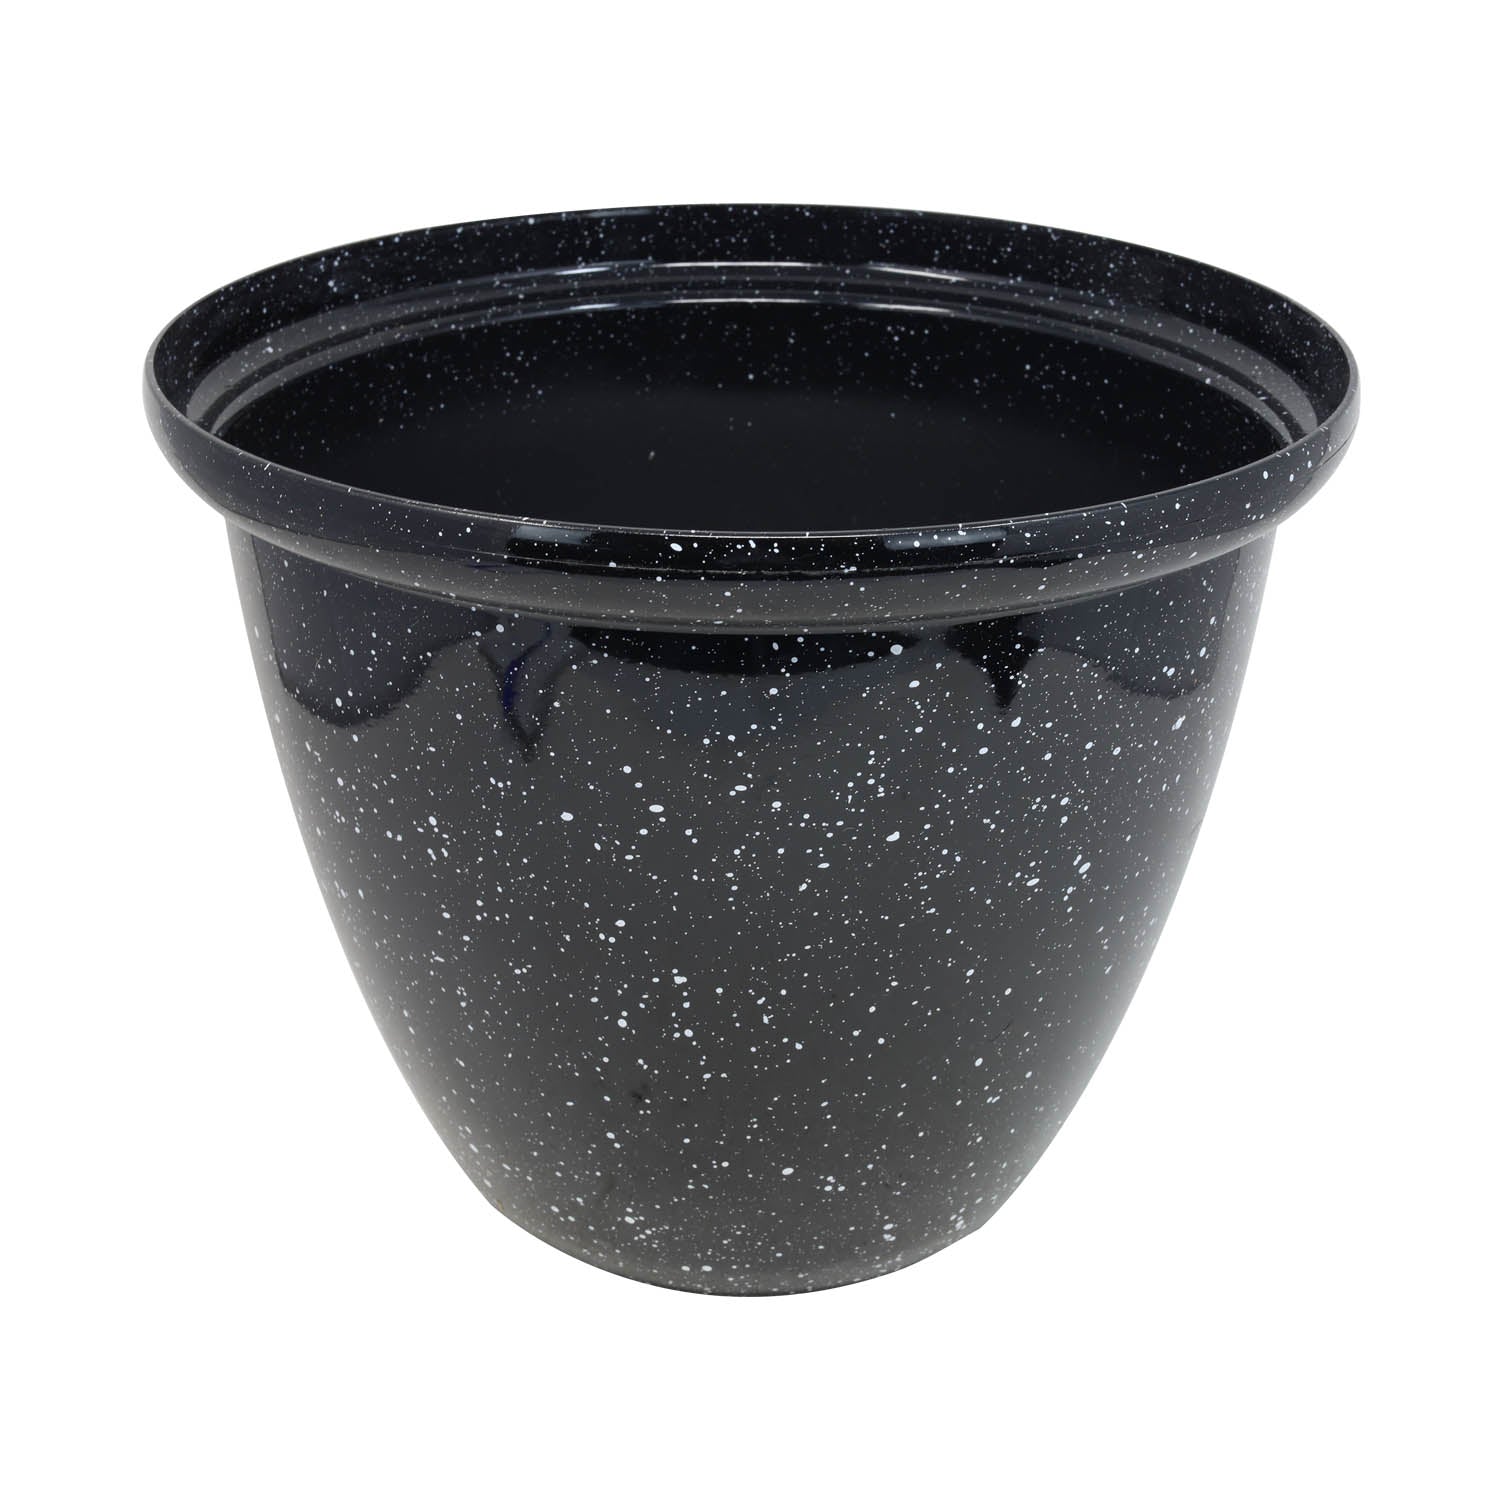 33cm Round Plastic Honey Pot Planter Black Gloss